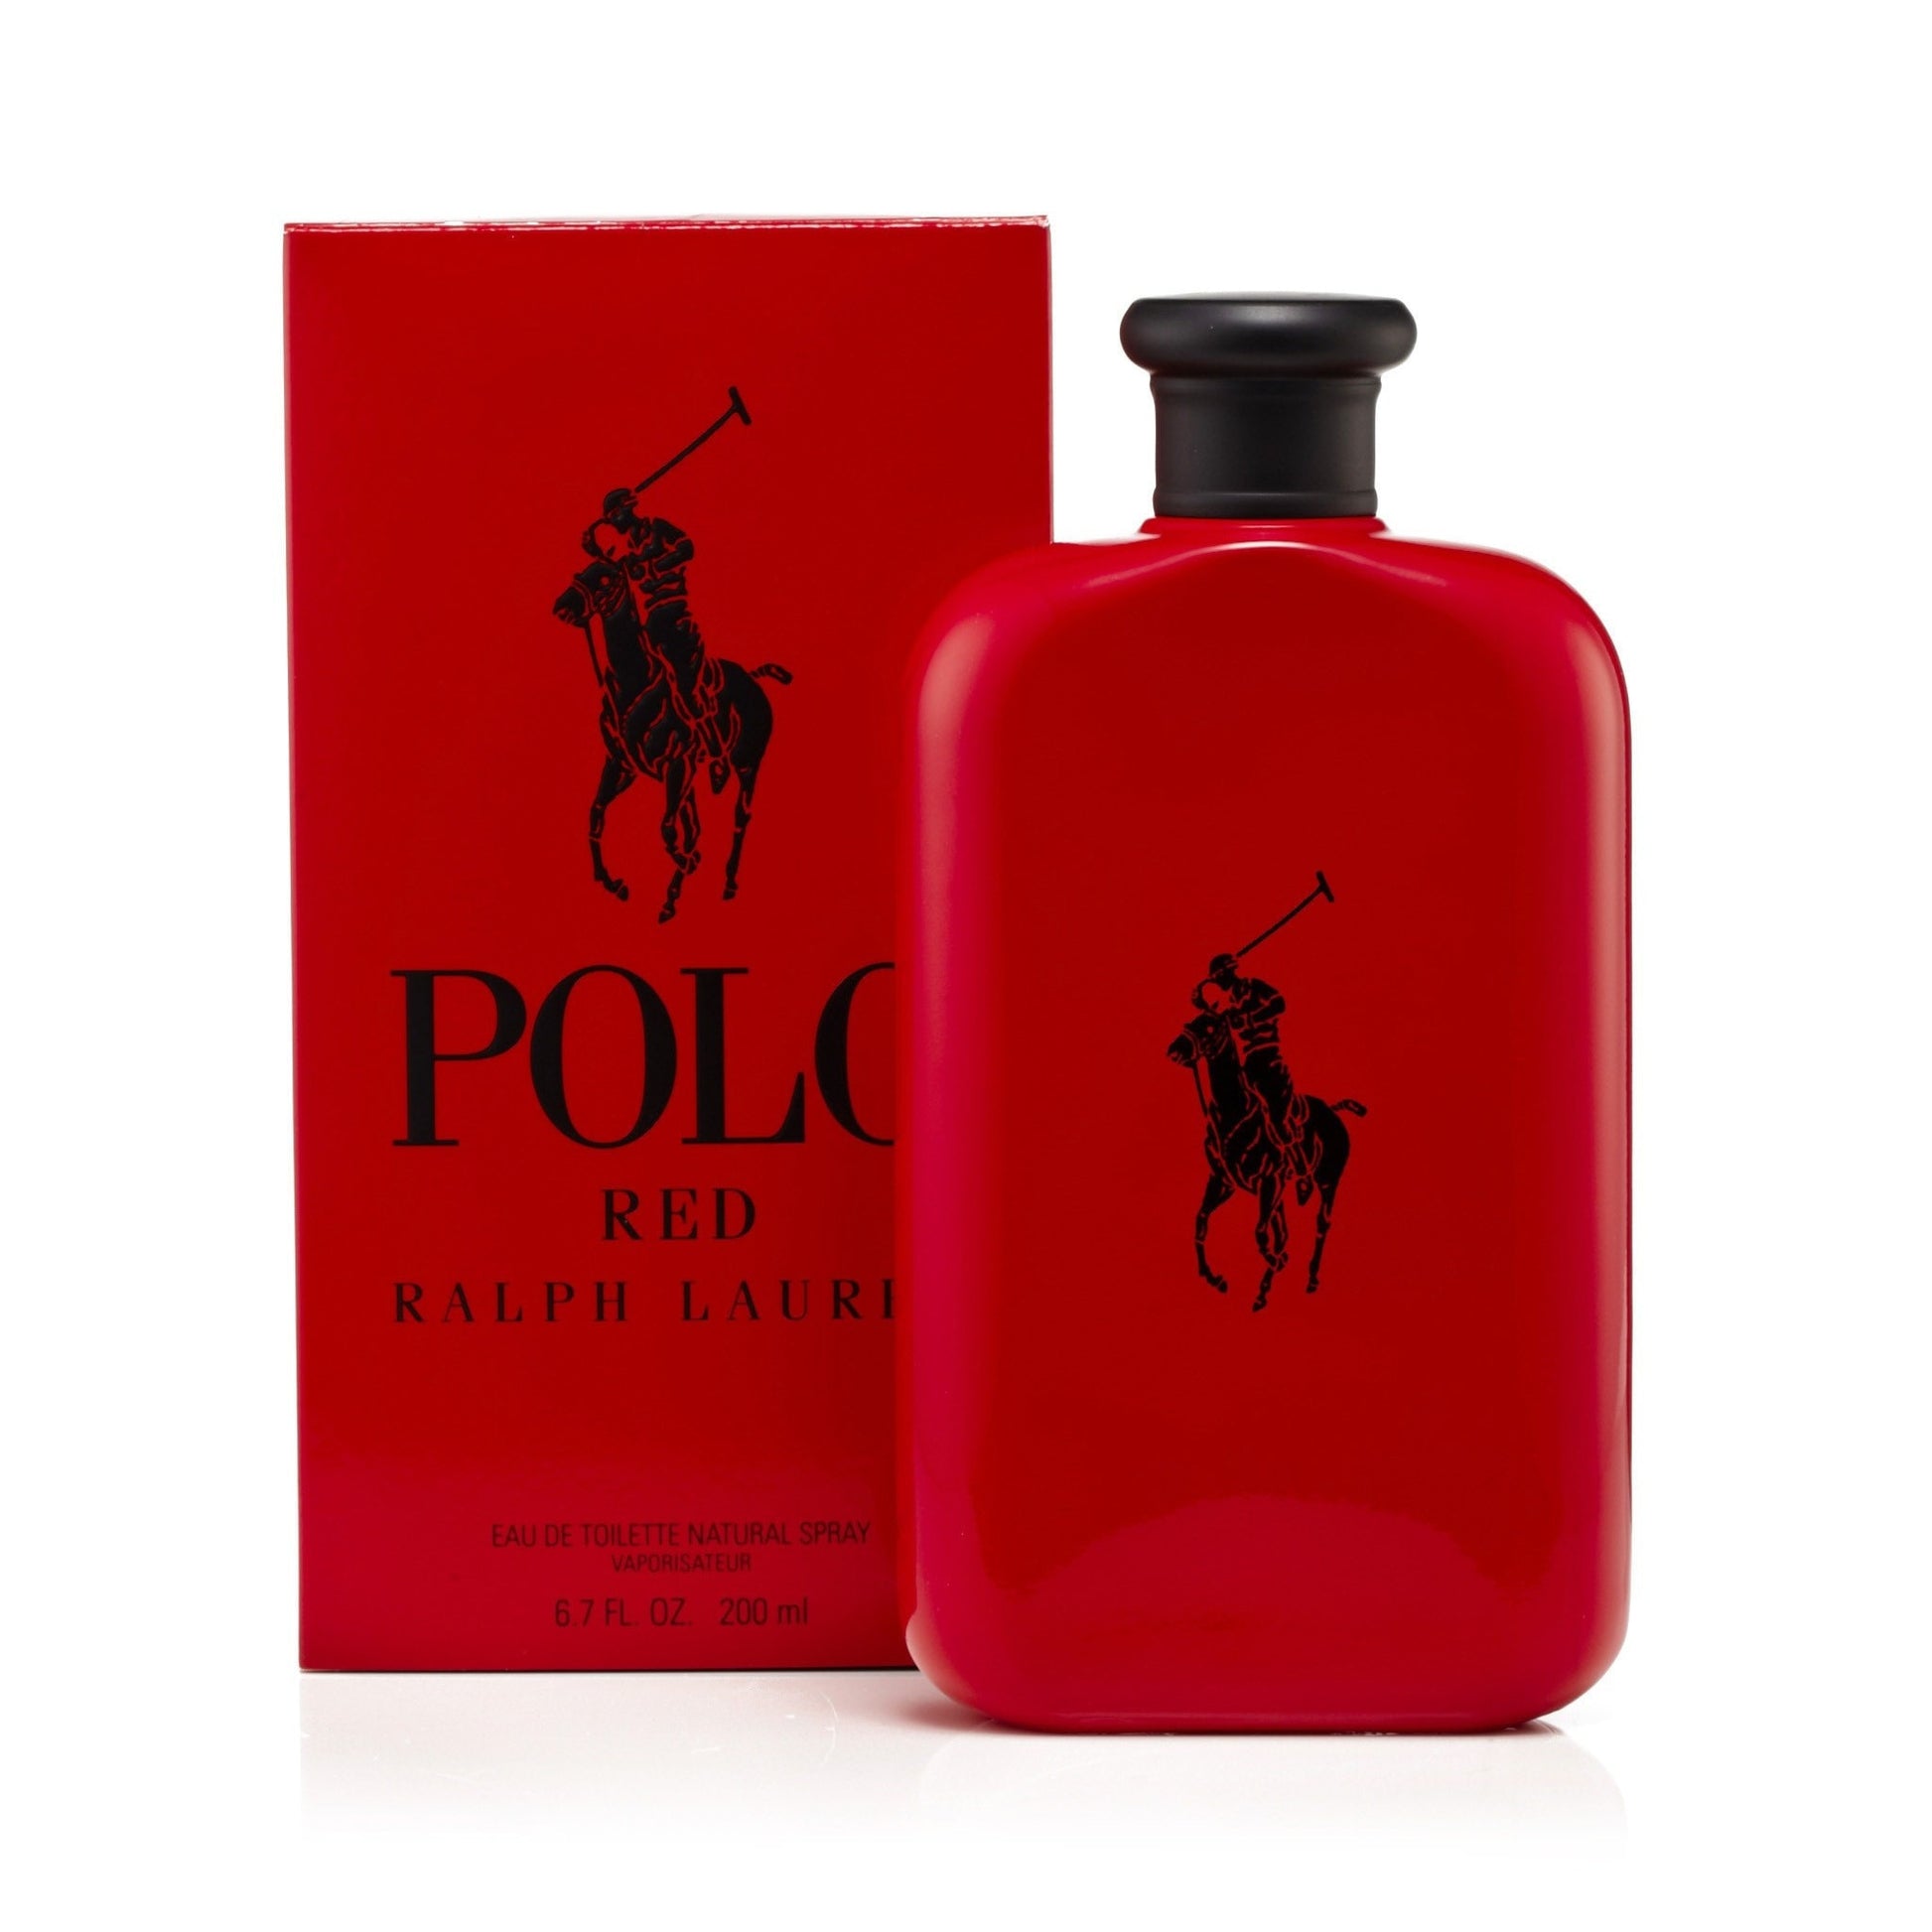 Ralph Lauren Polo Red Eau de Toilette Mens Spray 6.7 oz.  Click to open in modal